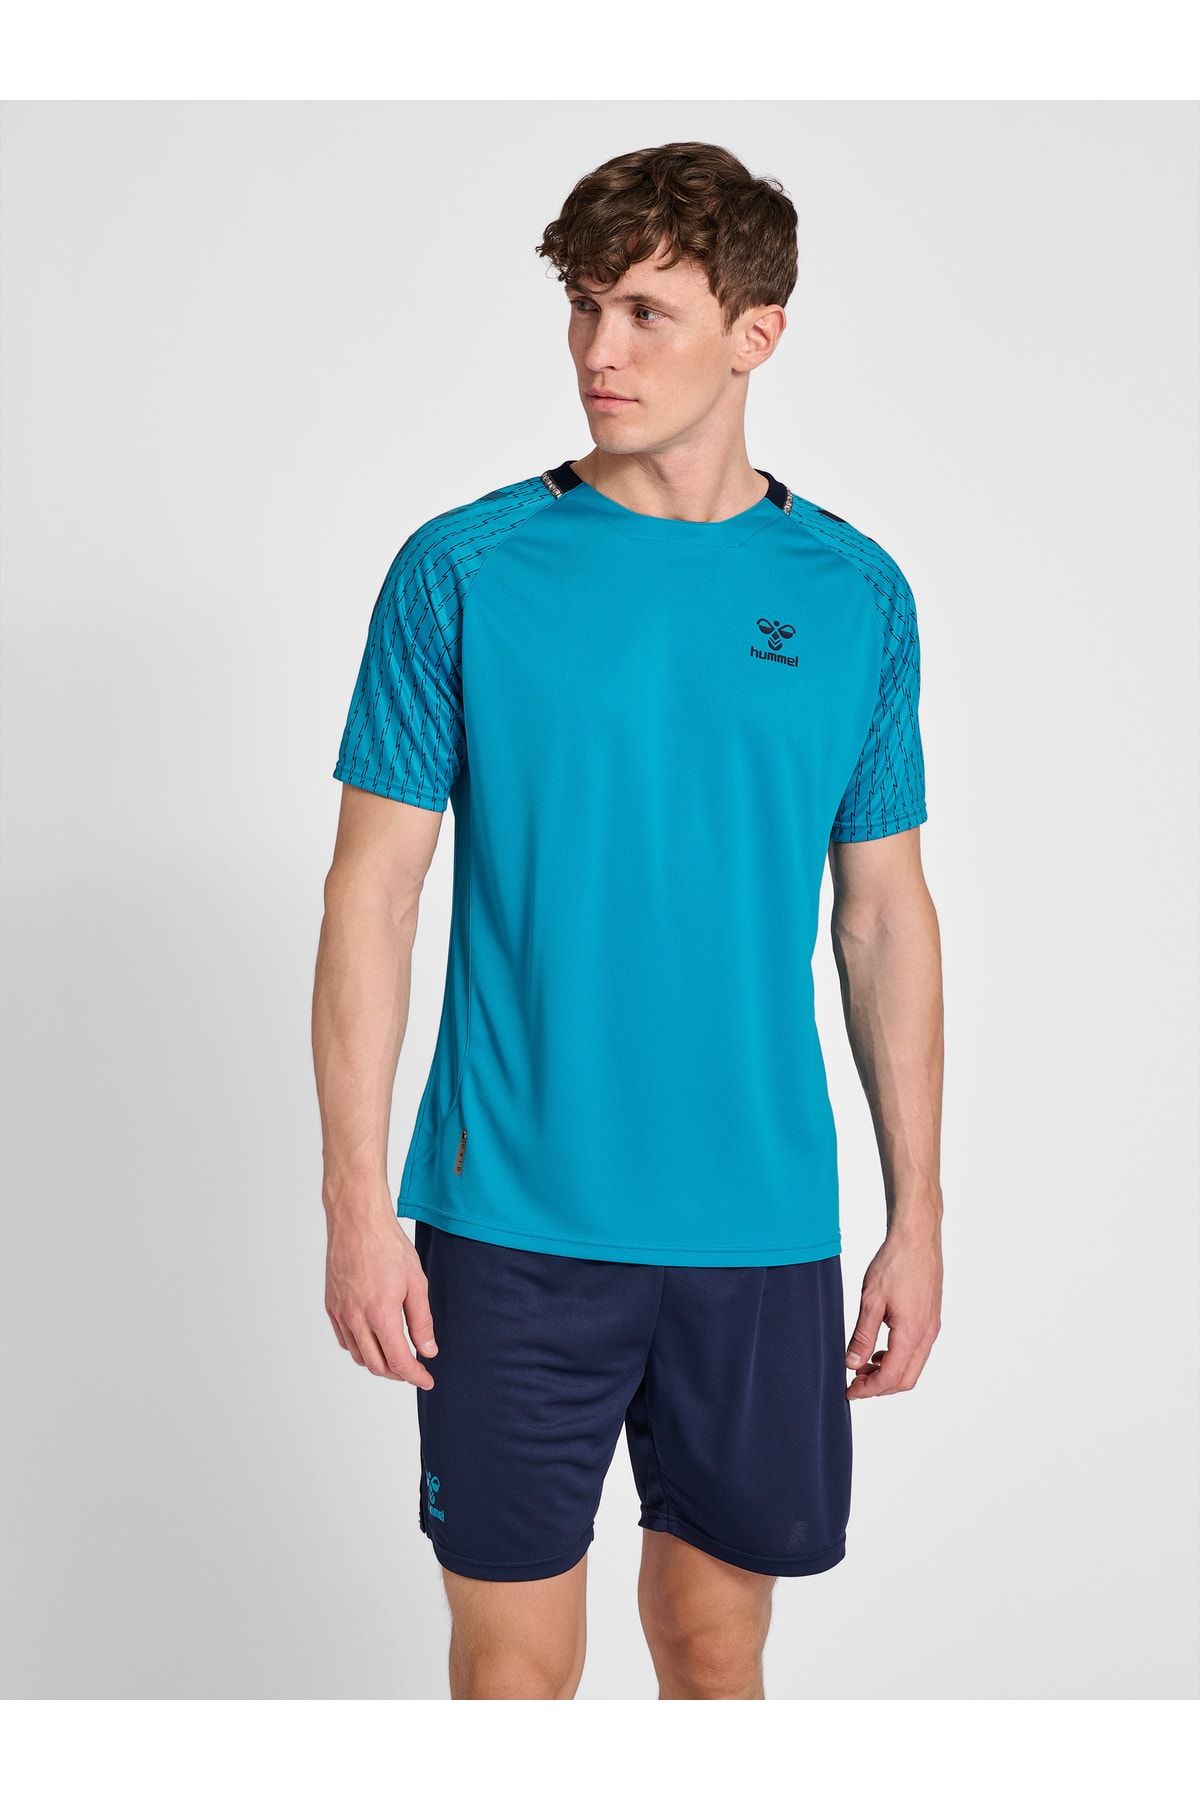 HUMMEL Regular - Blau Trendyol - T-Shirt - Fit